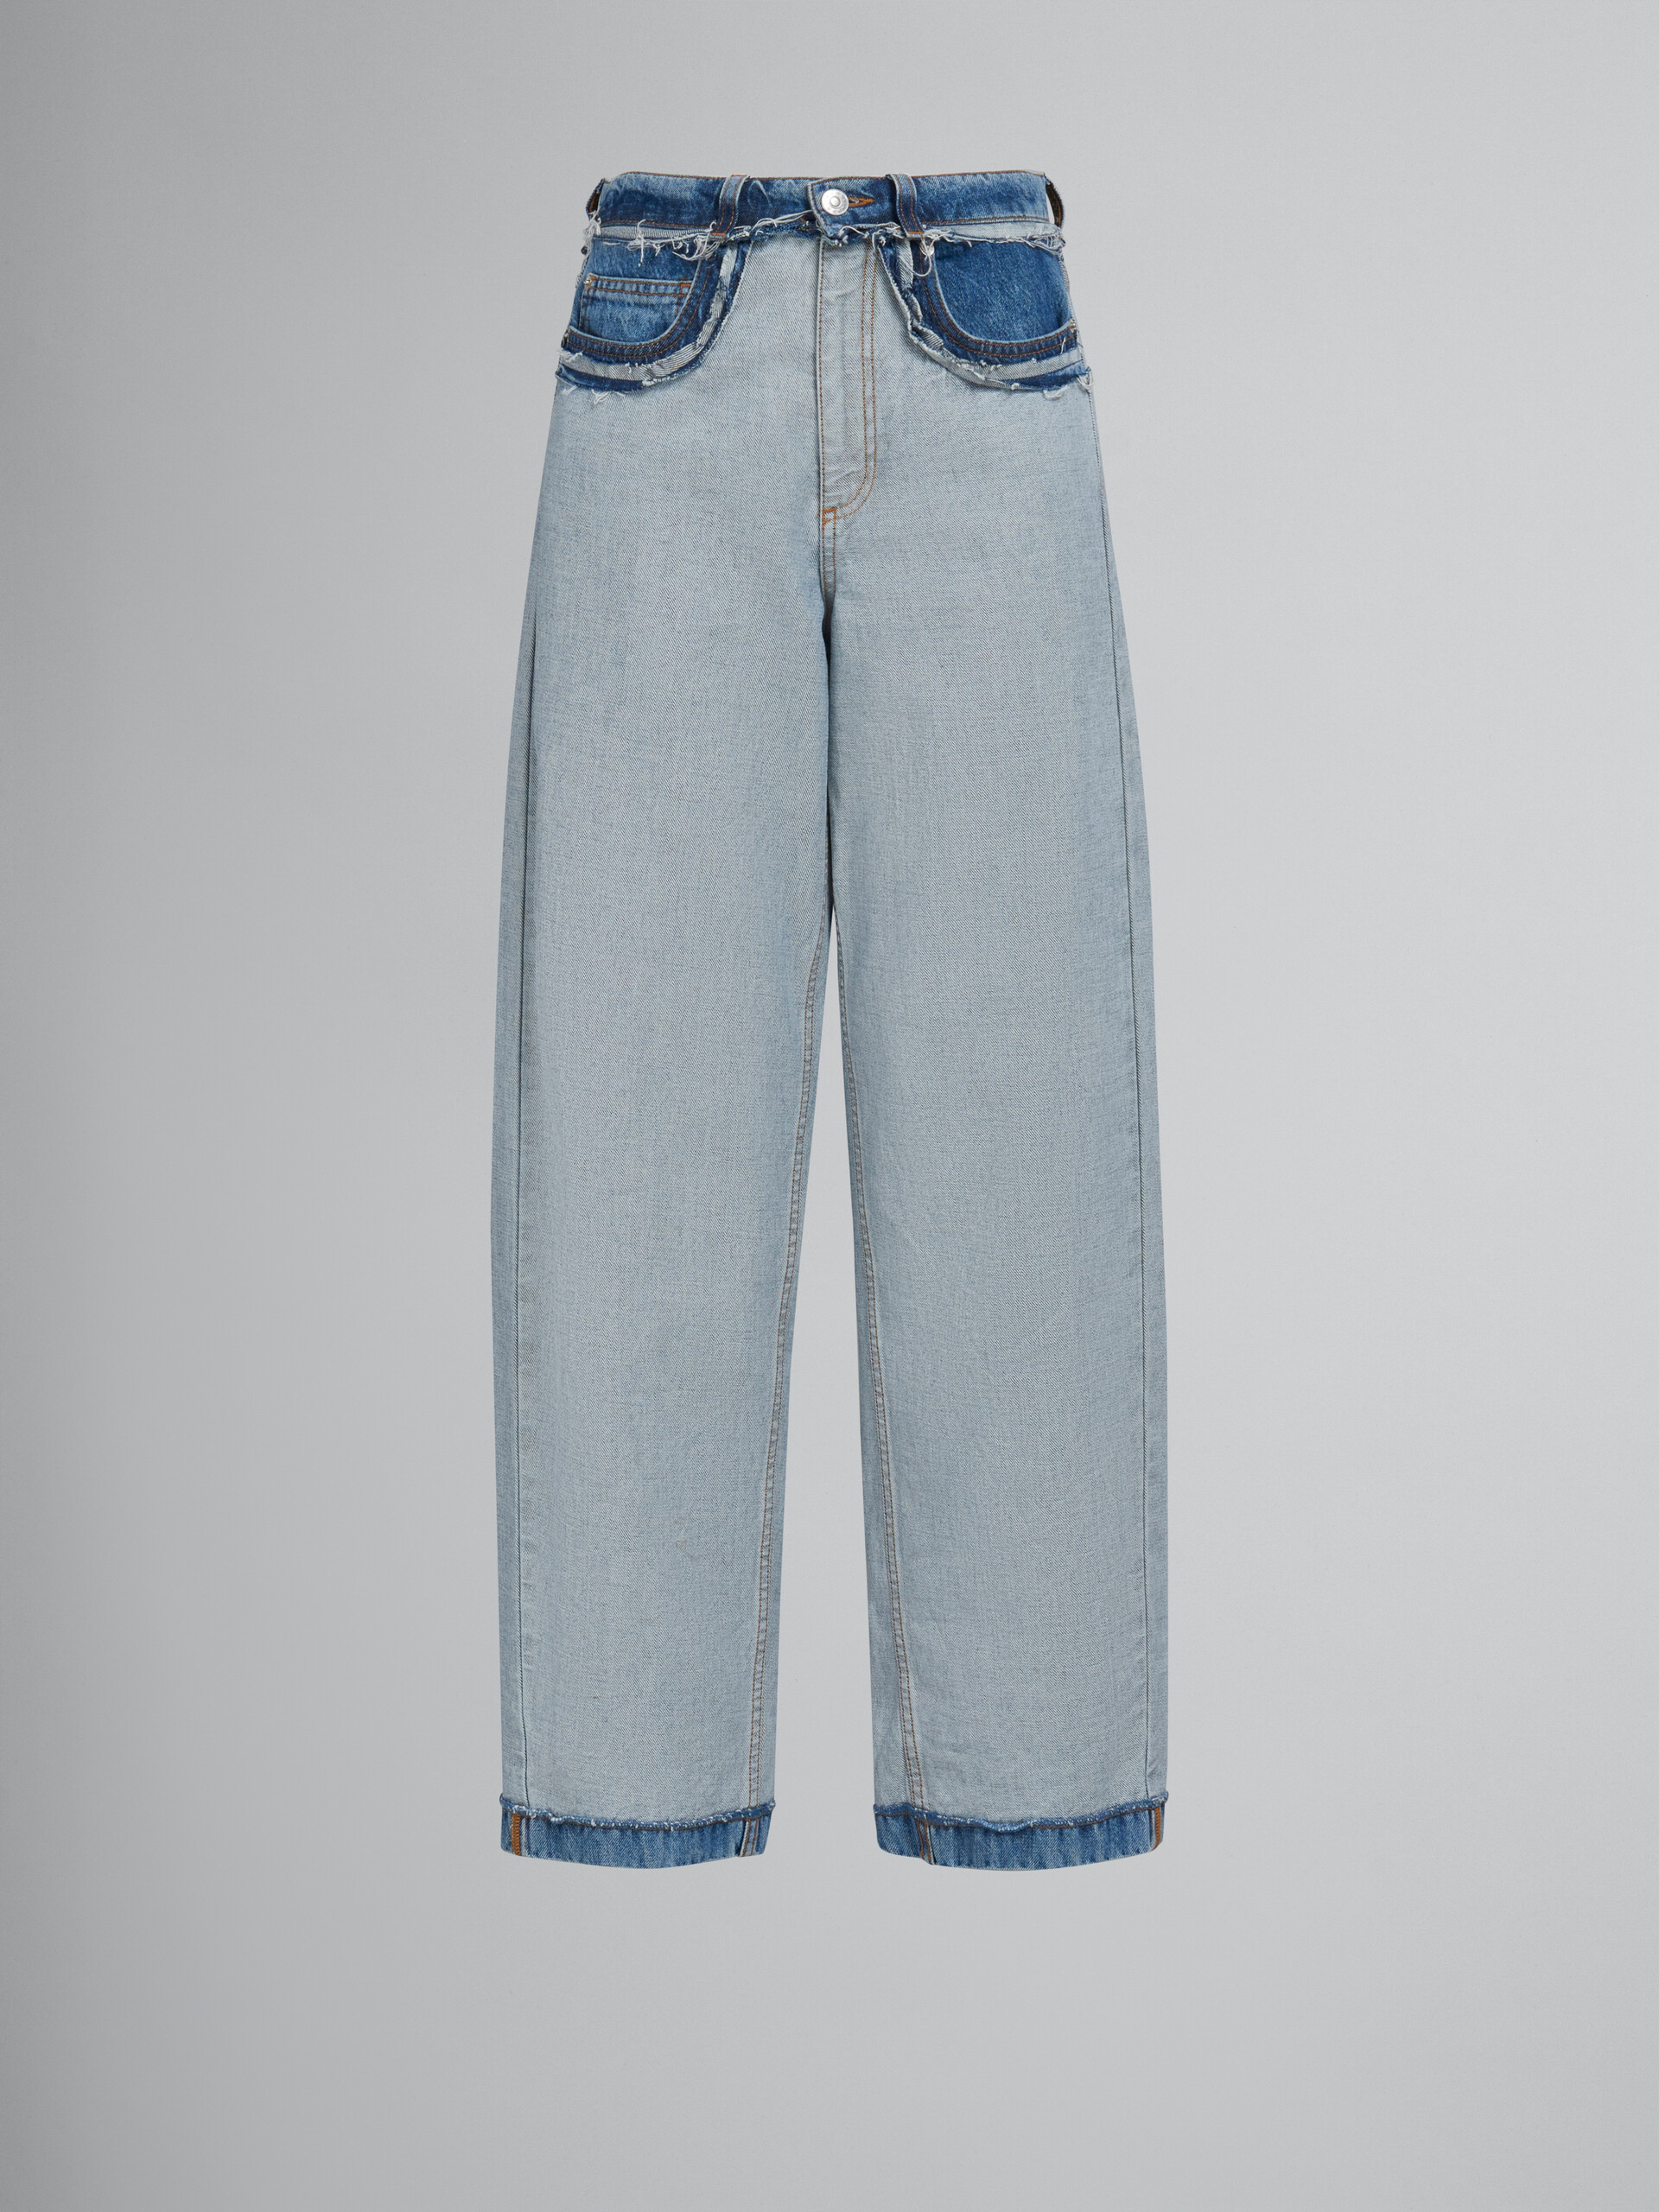 Blue inside-out denim carrot-fit jeans - Pants - Image 1